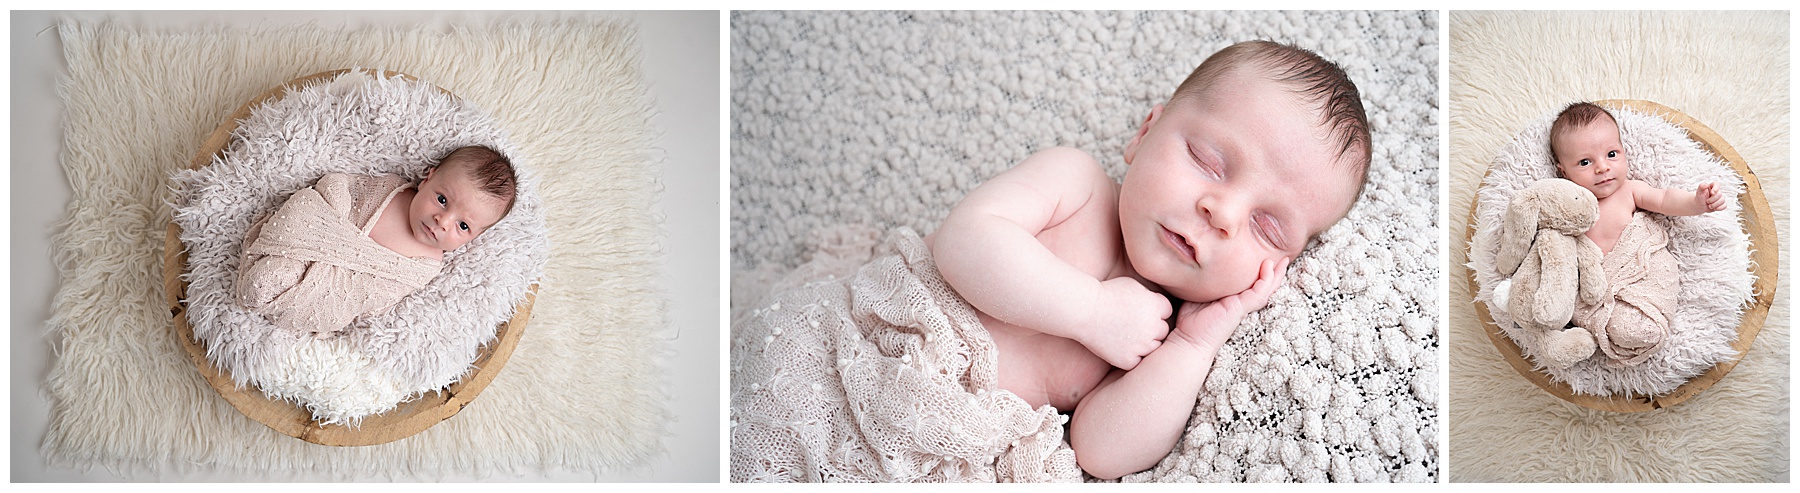 A Dorset newborn photographer has taken these lovely newborn photos of baby in a basket